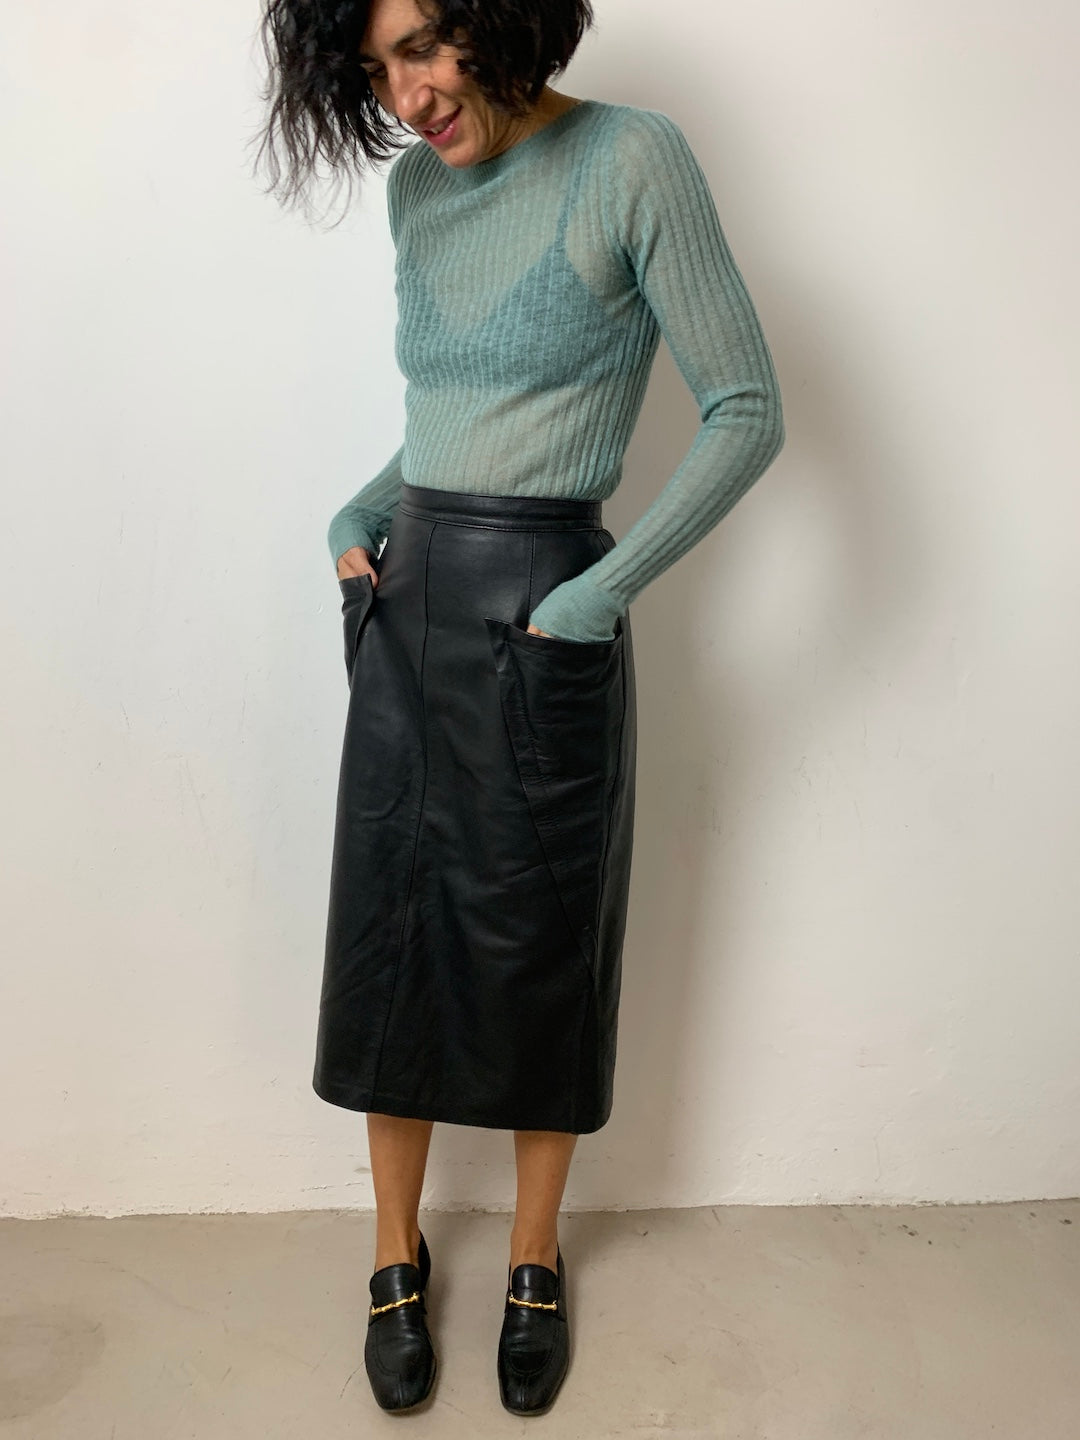 80s vintage leather skirt